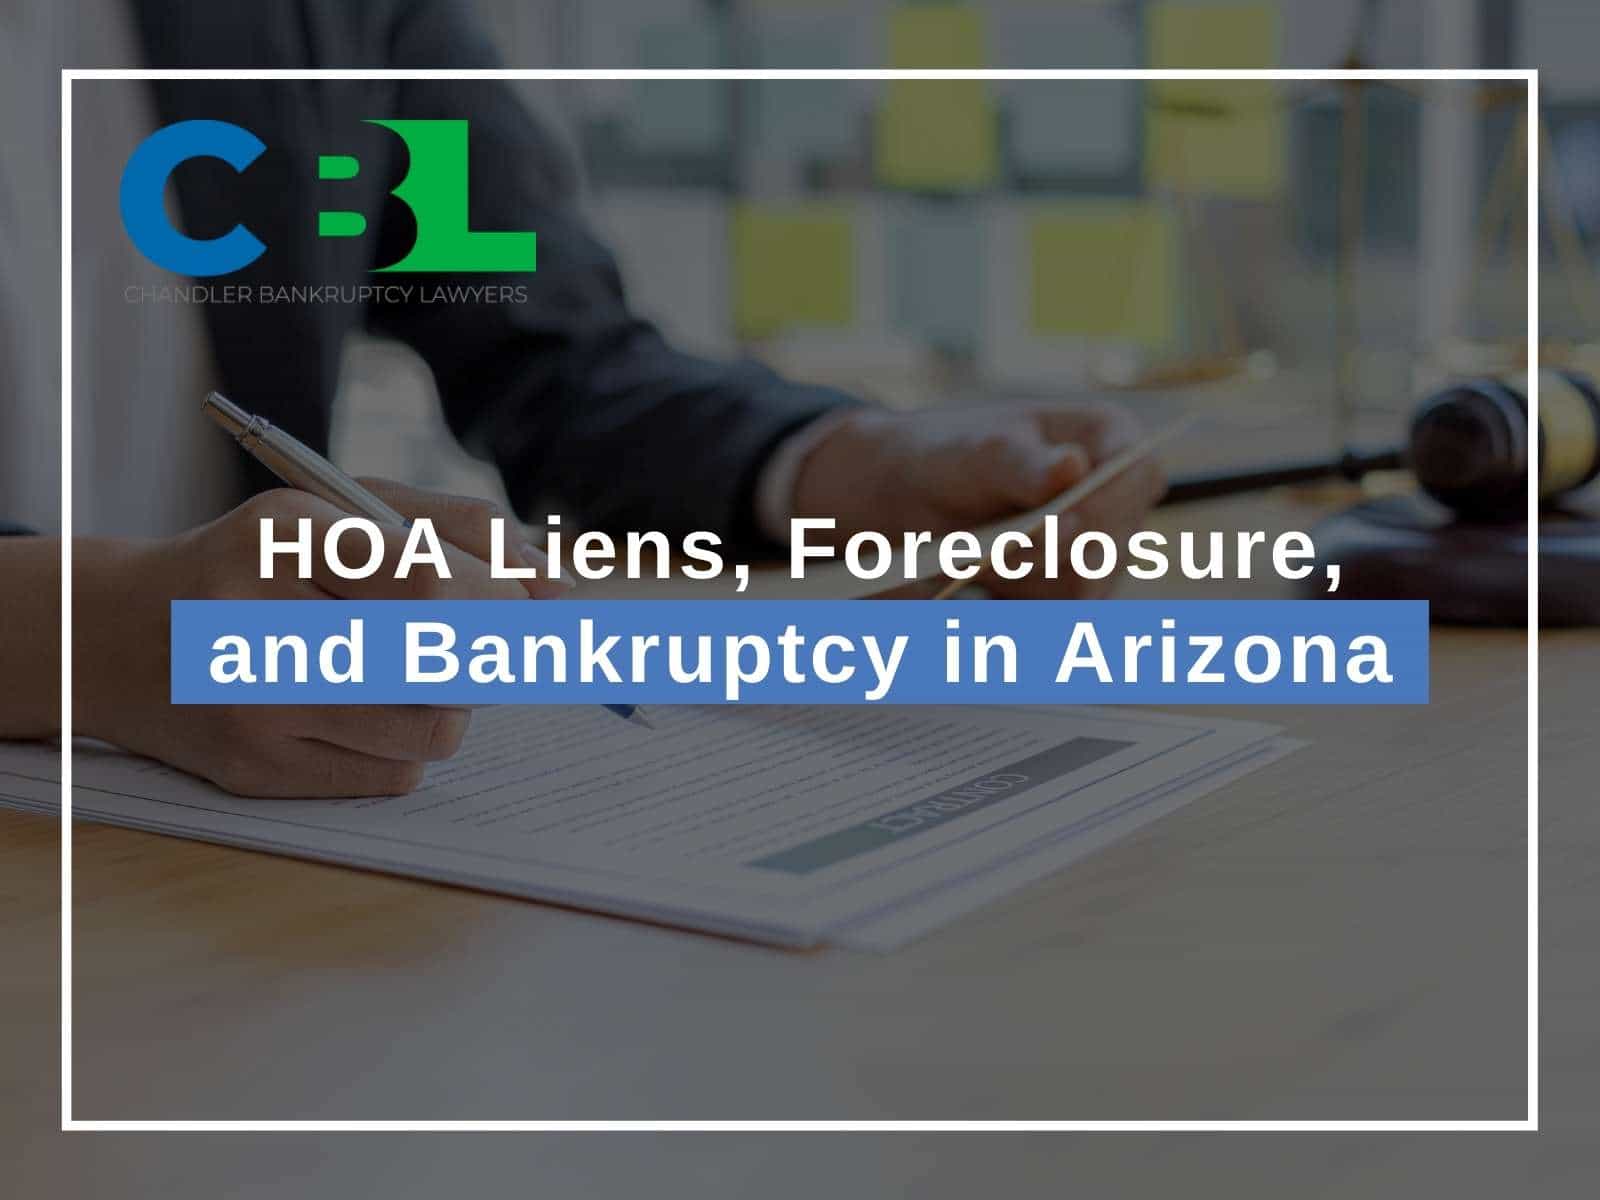 Filing bankruptcy in Arizona